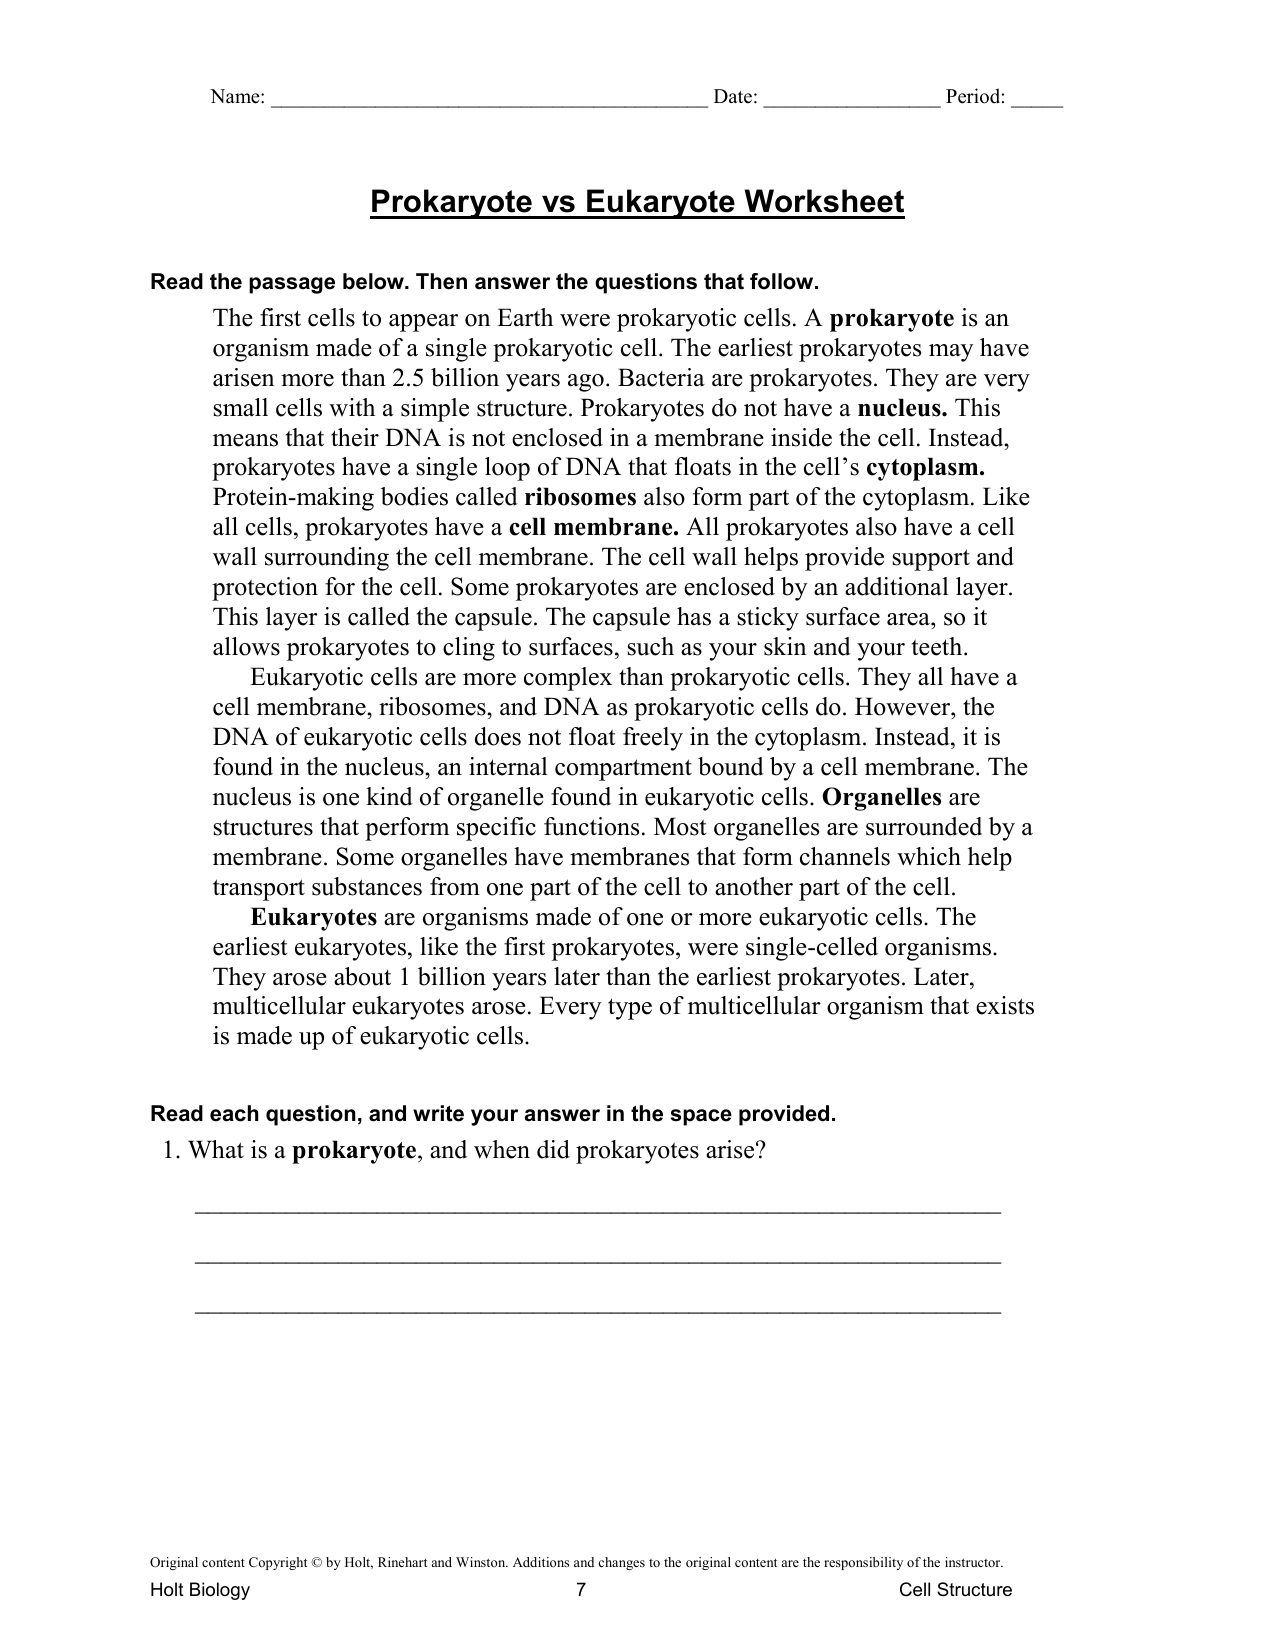 Prokaryote vs. Eukaryote Worksheet Regarding Prokaryote Vs Eukaryote Worksheet